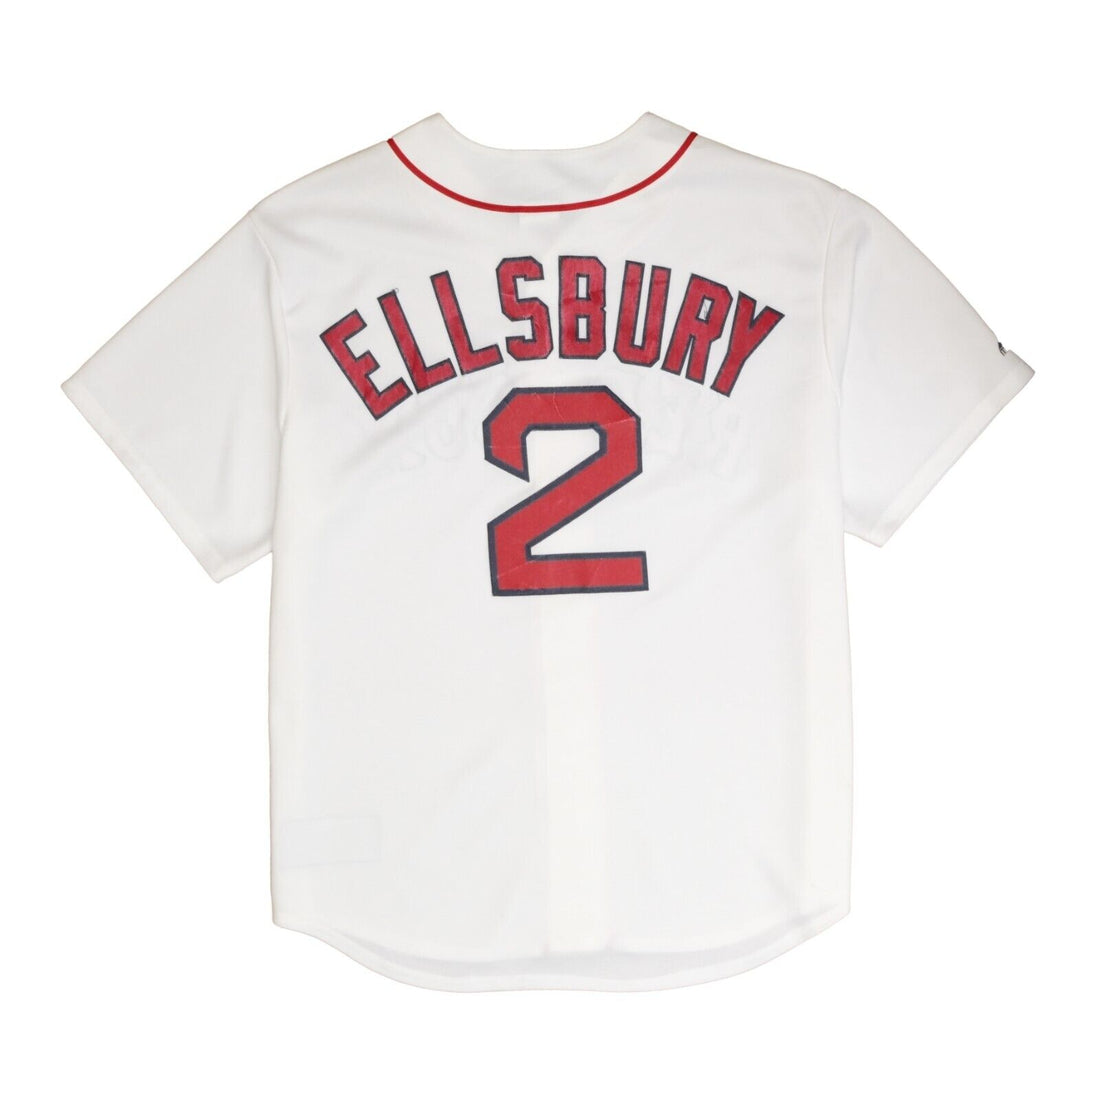 Vintage Boston Red Sox Coco Crisp Majestic Jersey Size White Medium MLB